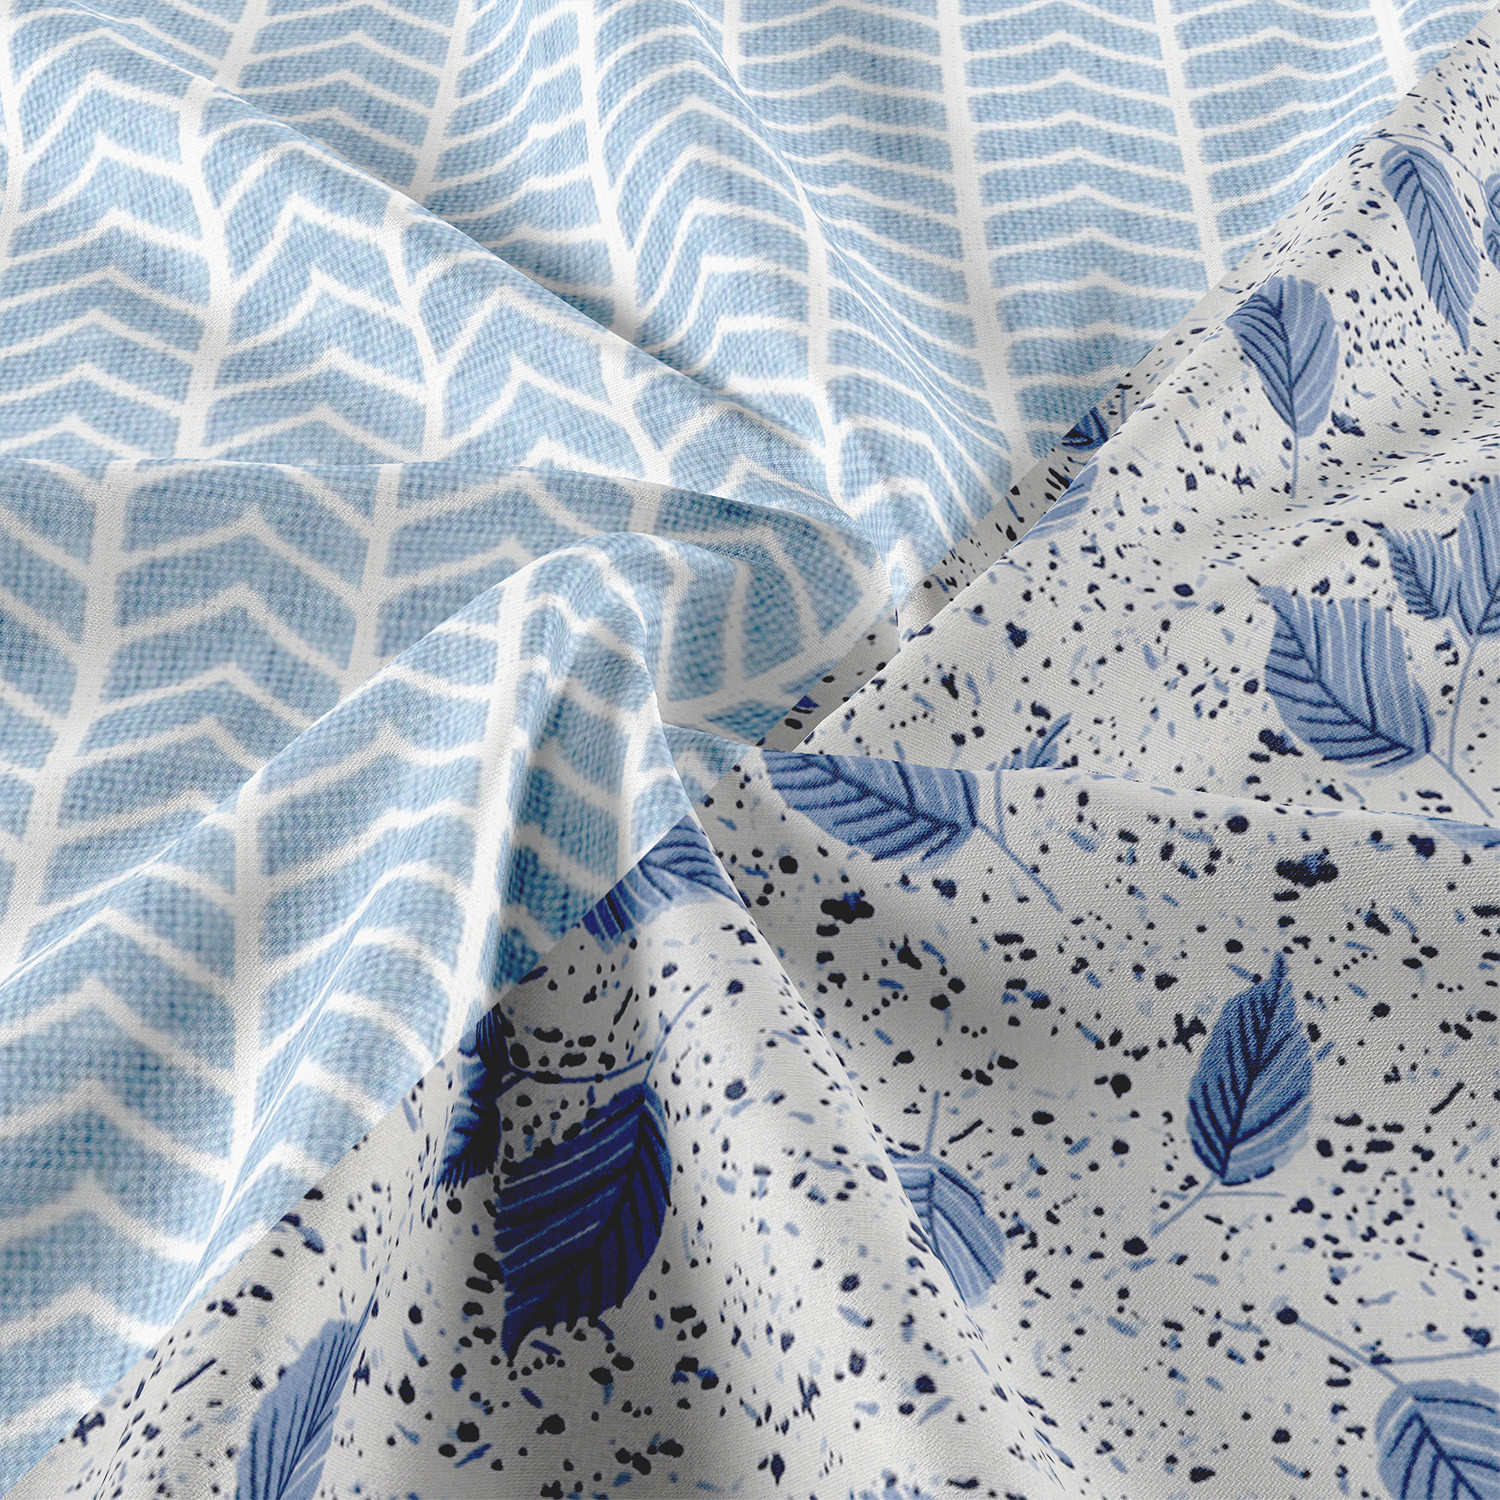 Kuber Industries Blanket | Cotton Double Bed Dohar | Blanket For Home | Reversible AC Blanket For Travelling | Blanket For Summer | Blanket For Winters | Leaf Print | Blue